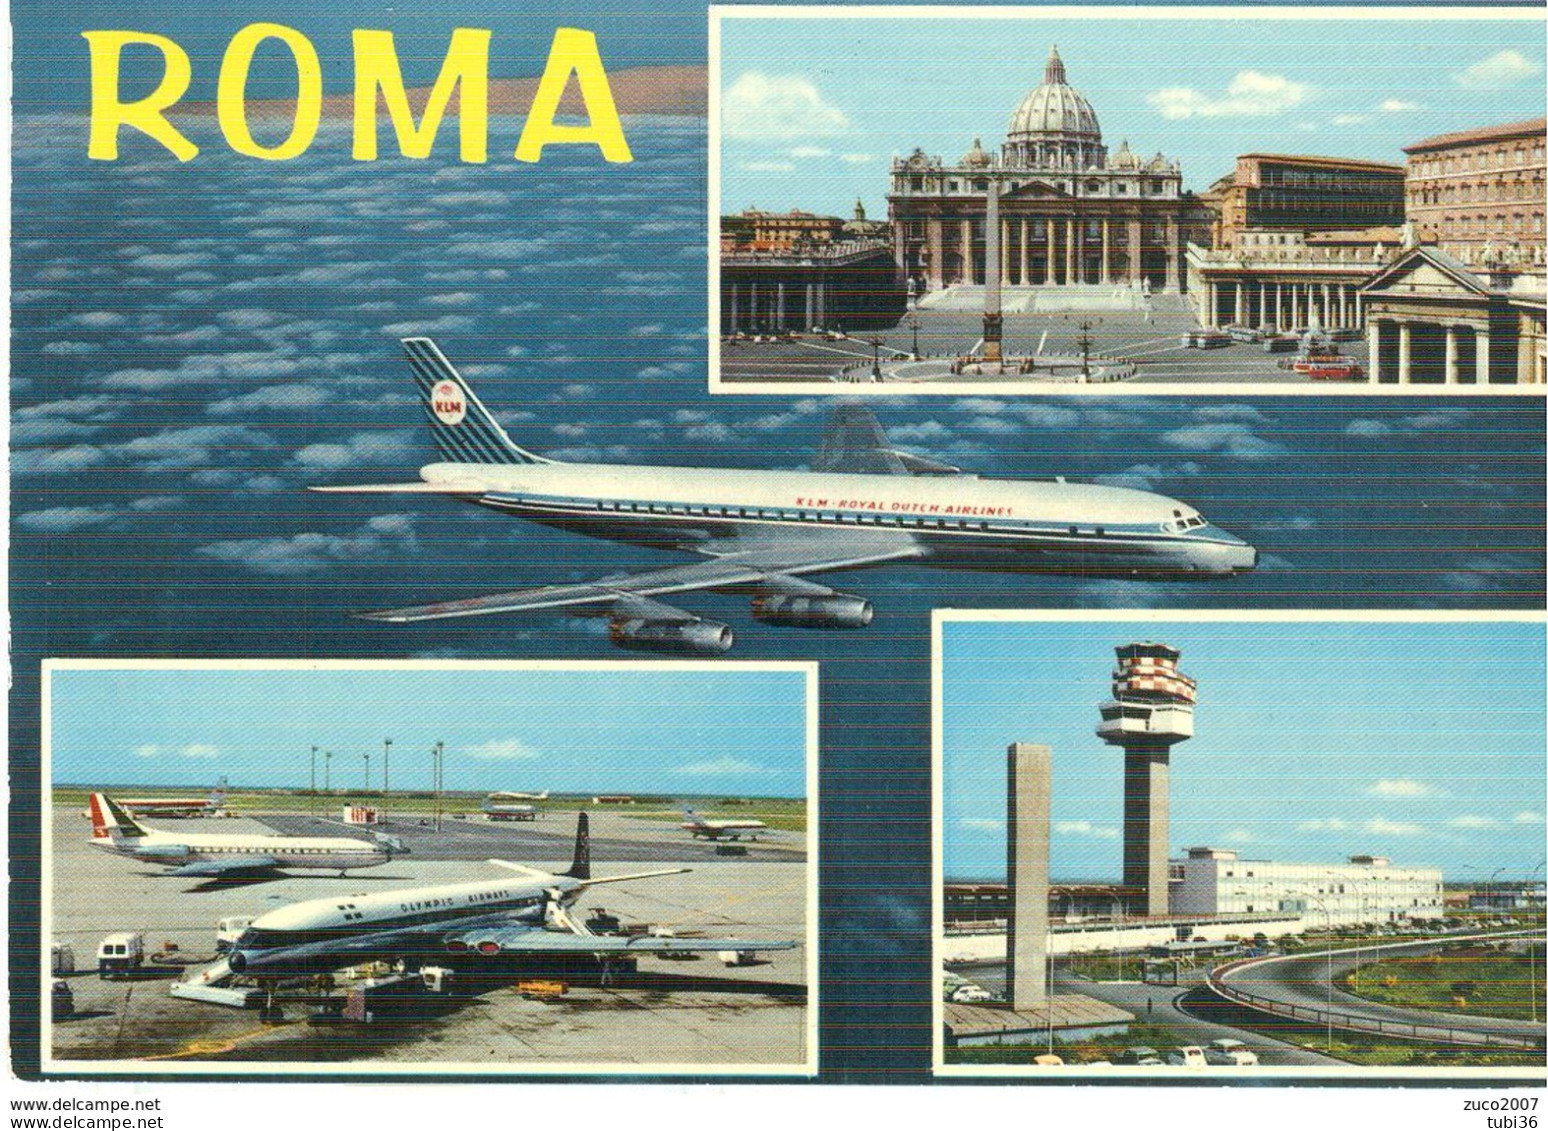 ROMA - 4 VEDUTINE - AEROPORTO,AEREI -S.PIETRO-COLORI,VIAGGIATA 1969 - POSTE ROMA - Trasporti